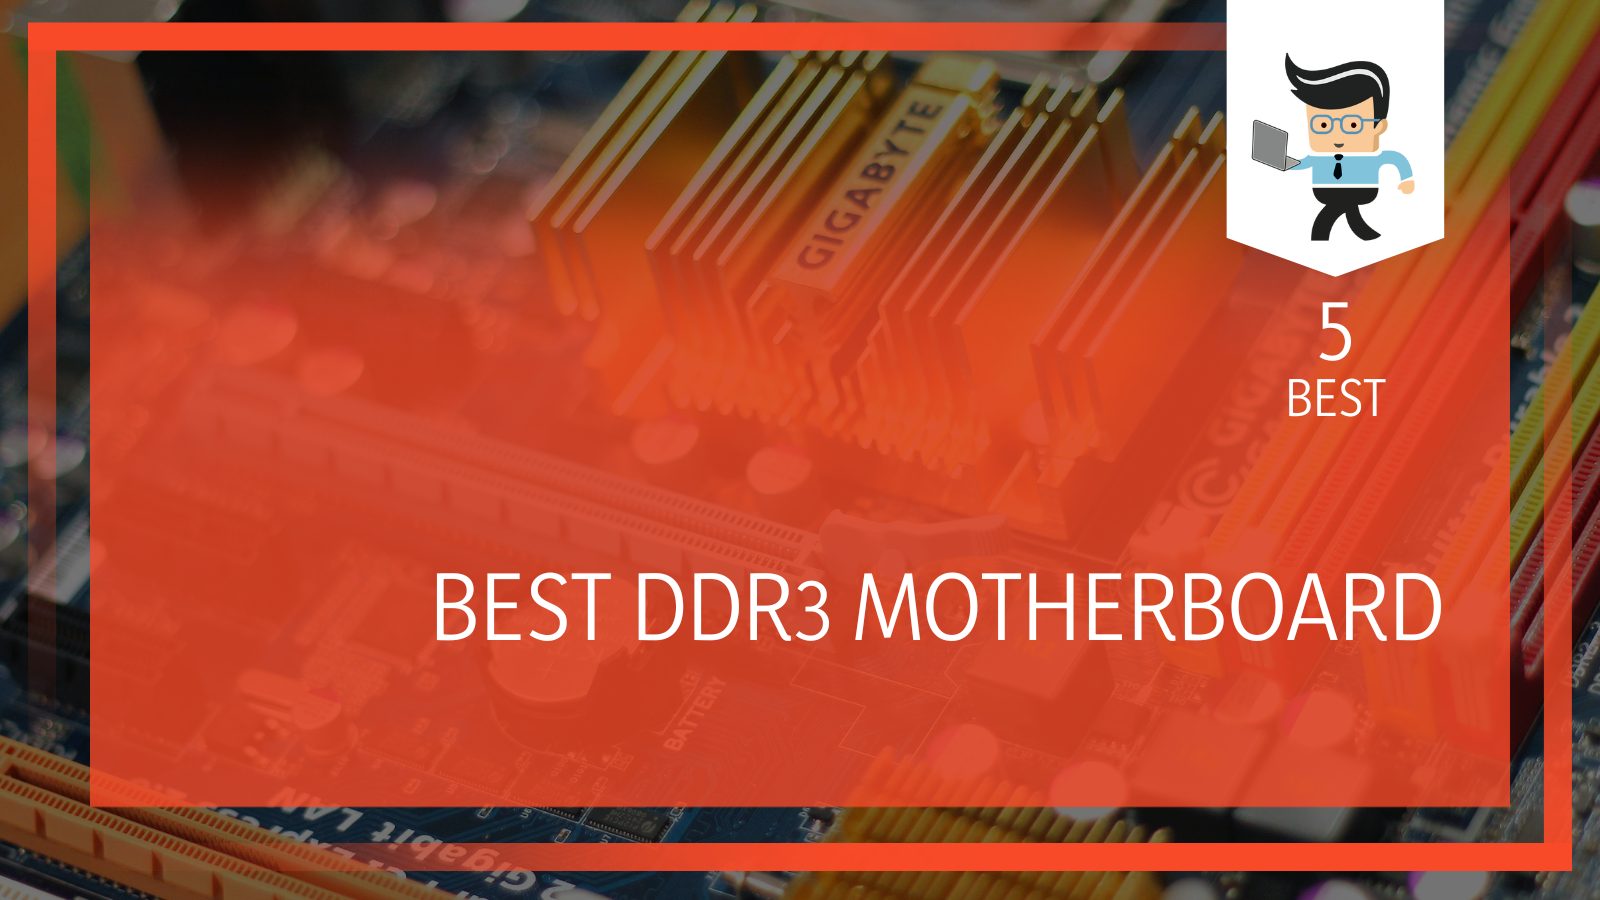 Best DDR3 Motherboard